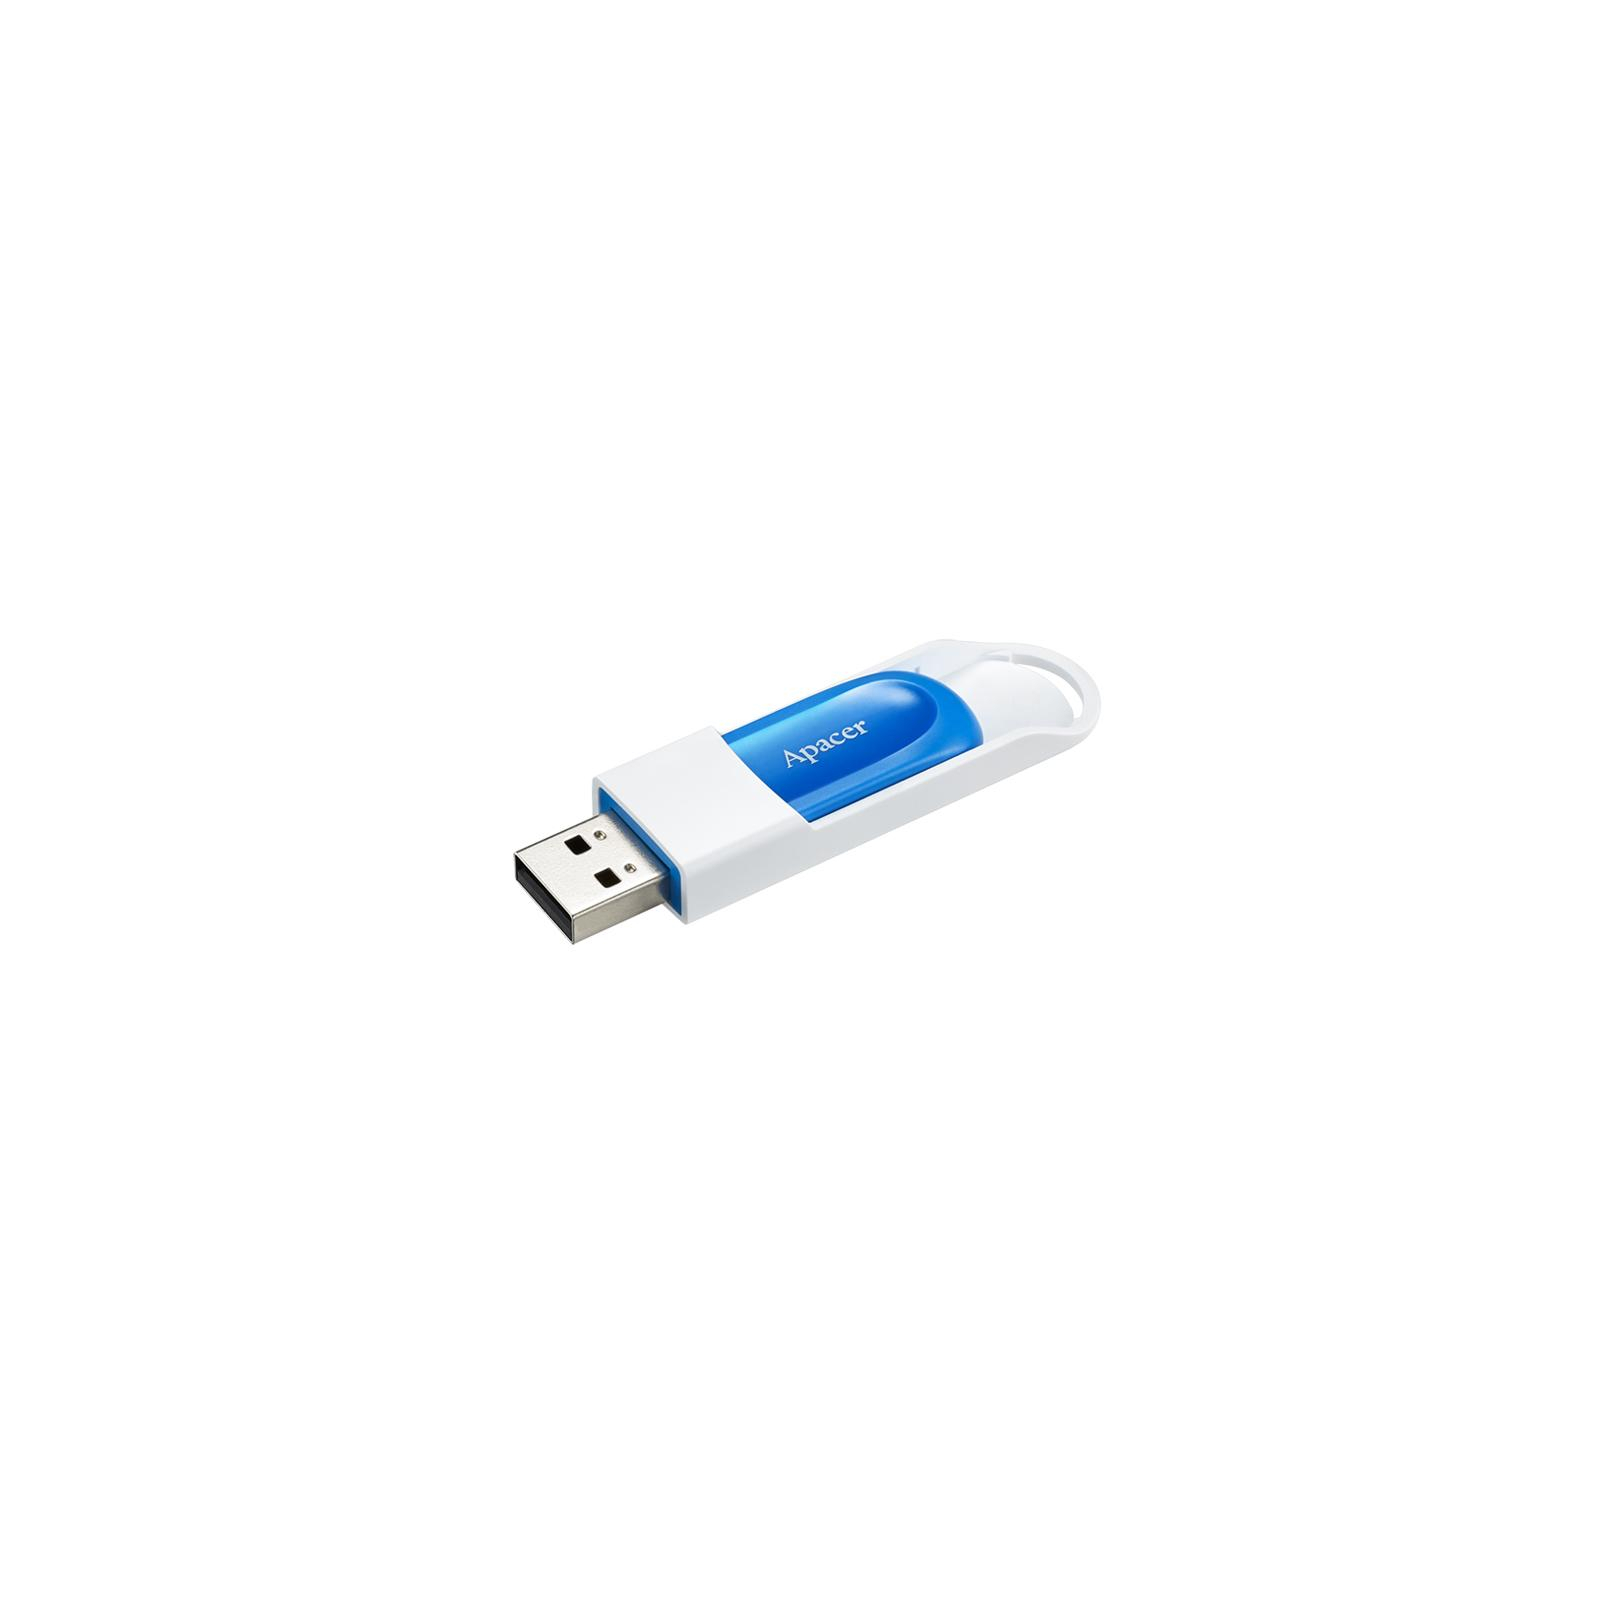 USB флеш накопитель Apacer 16GB AH23A White USB 2.0 (AP16GAH23AW-1) изображение 3